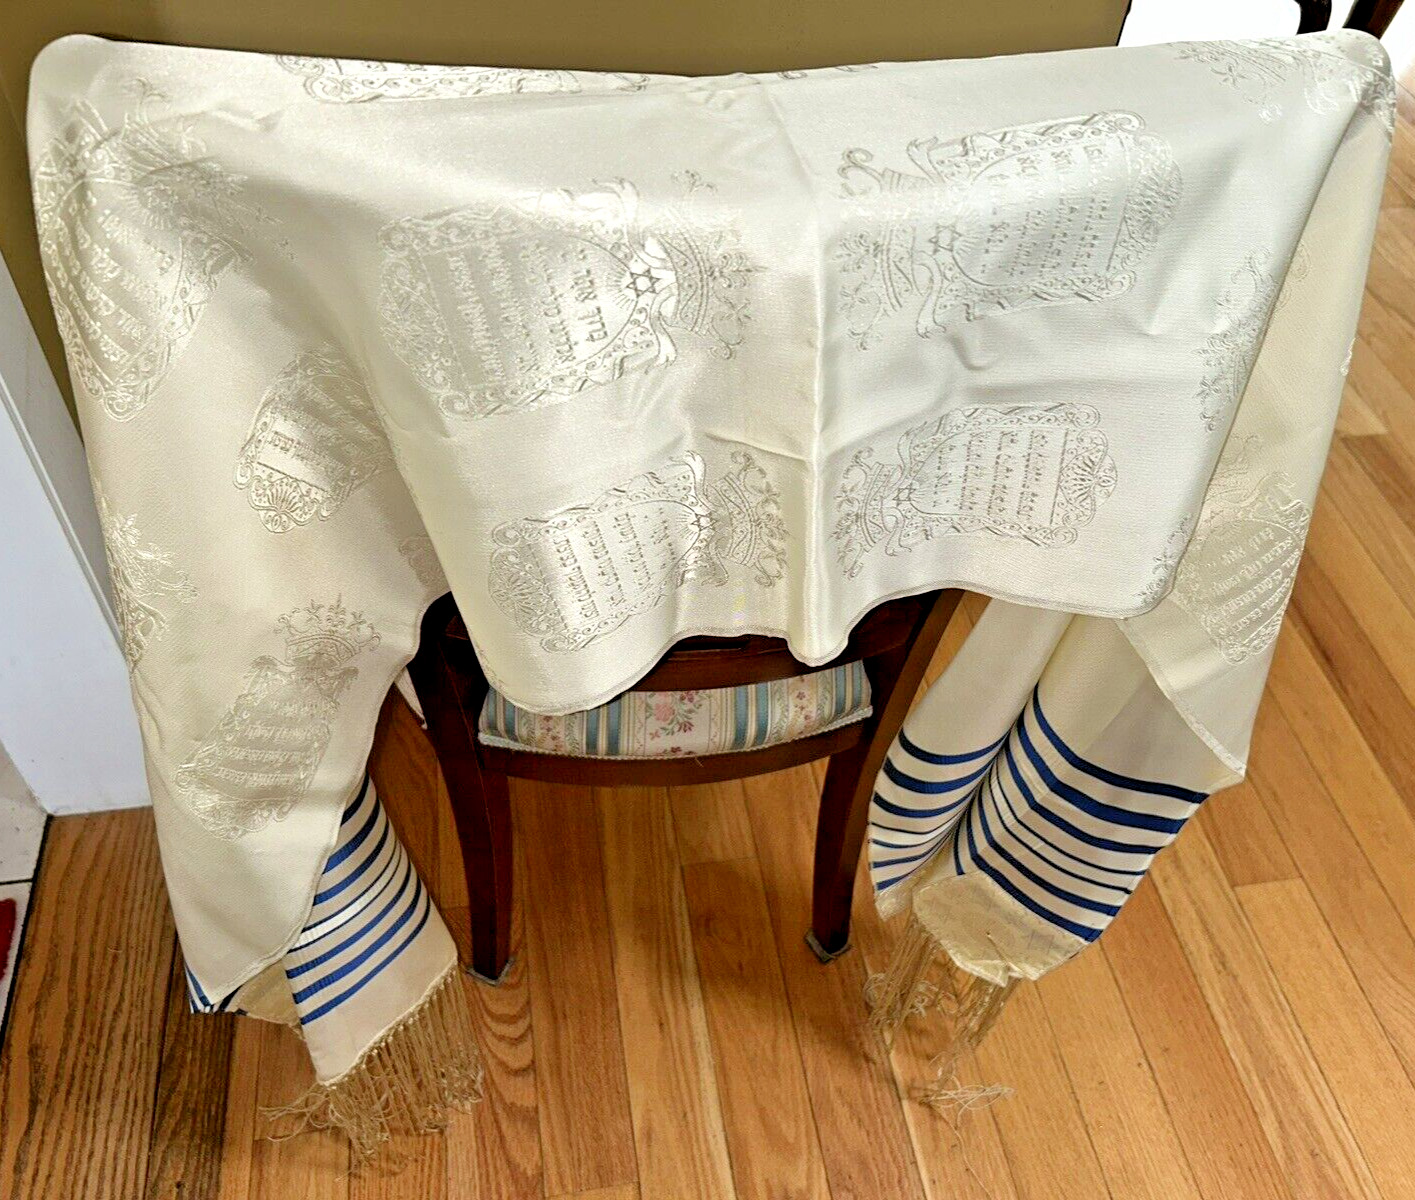 Vintage Tallis Prayer Judaism Judaica Synagogue Highly Ornate Embroidery Look